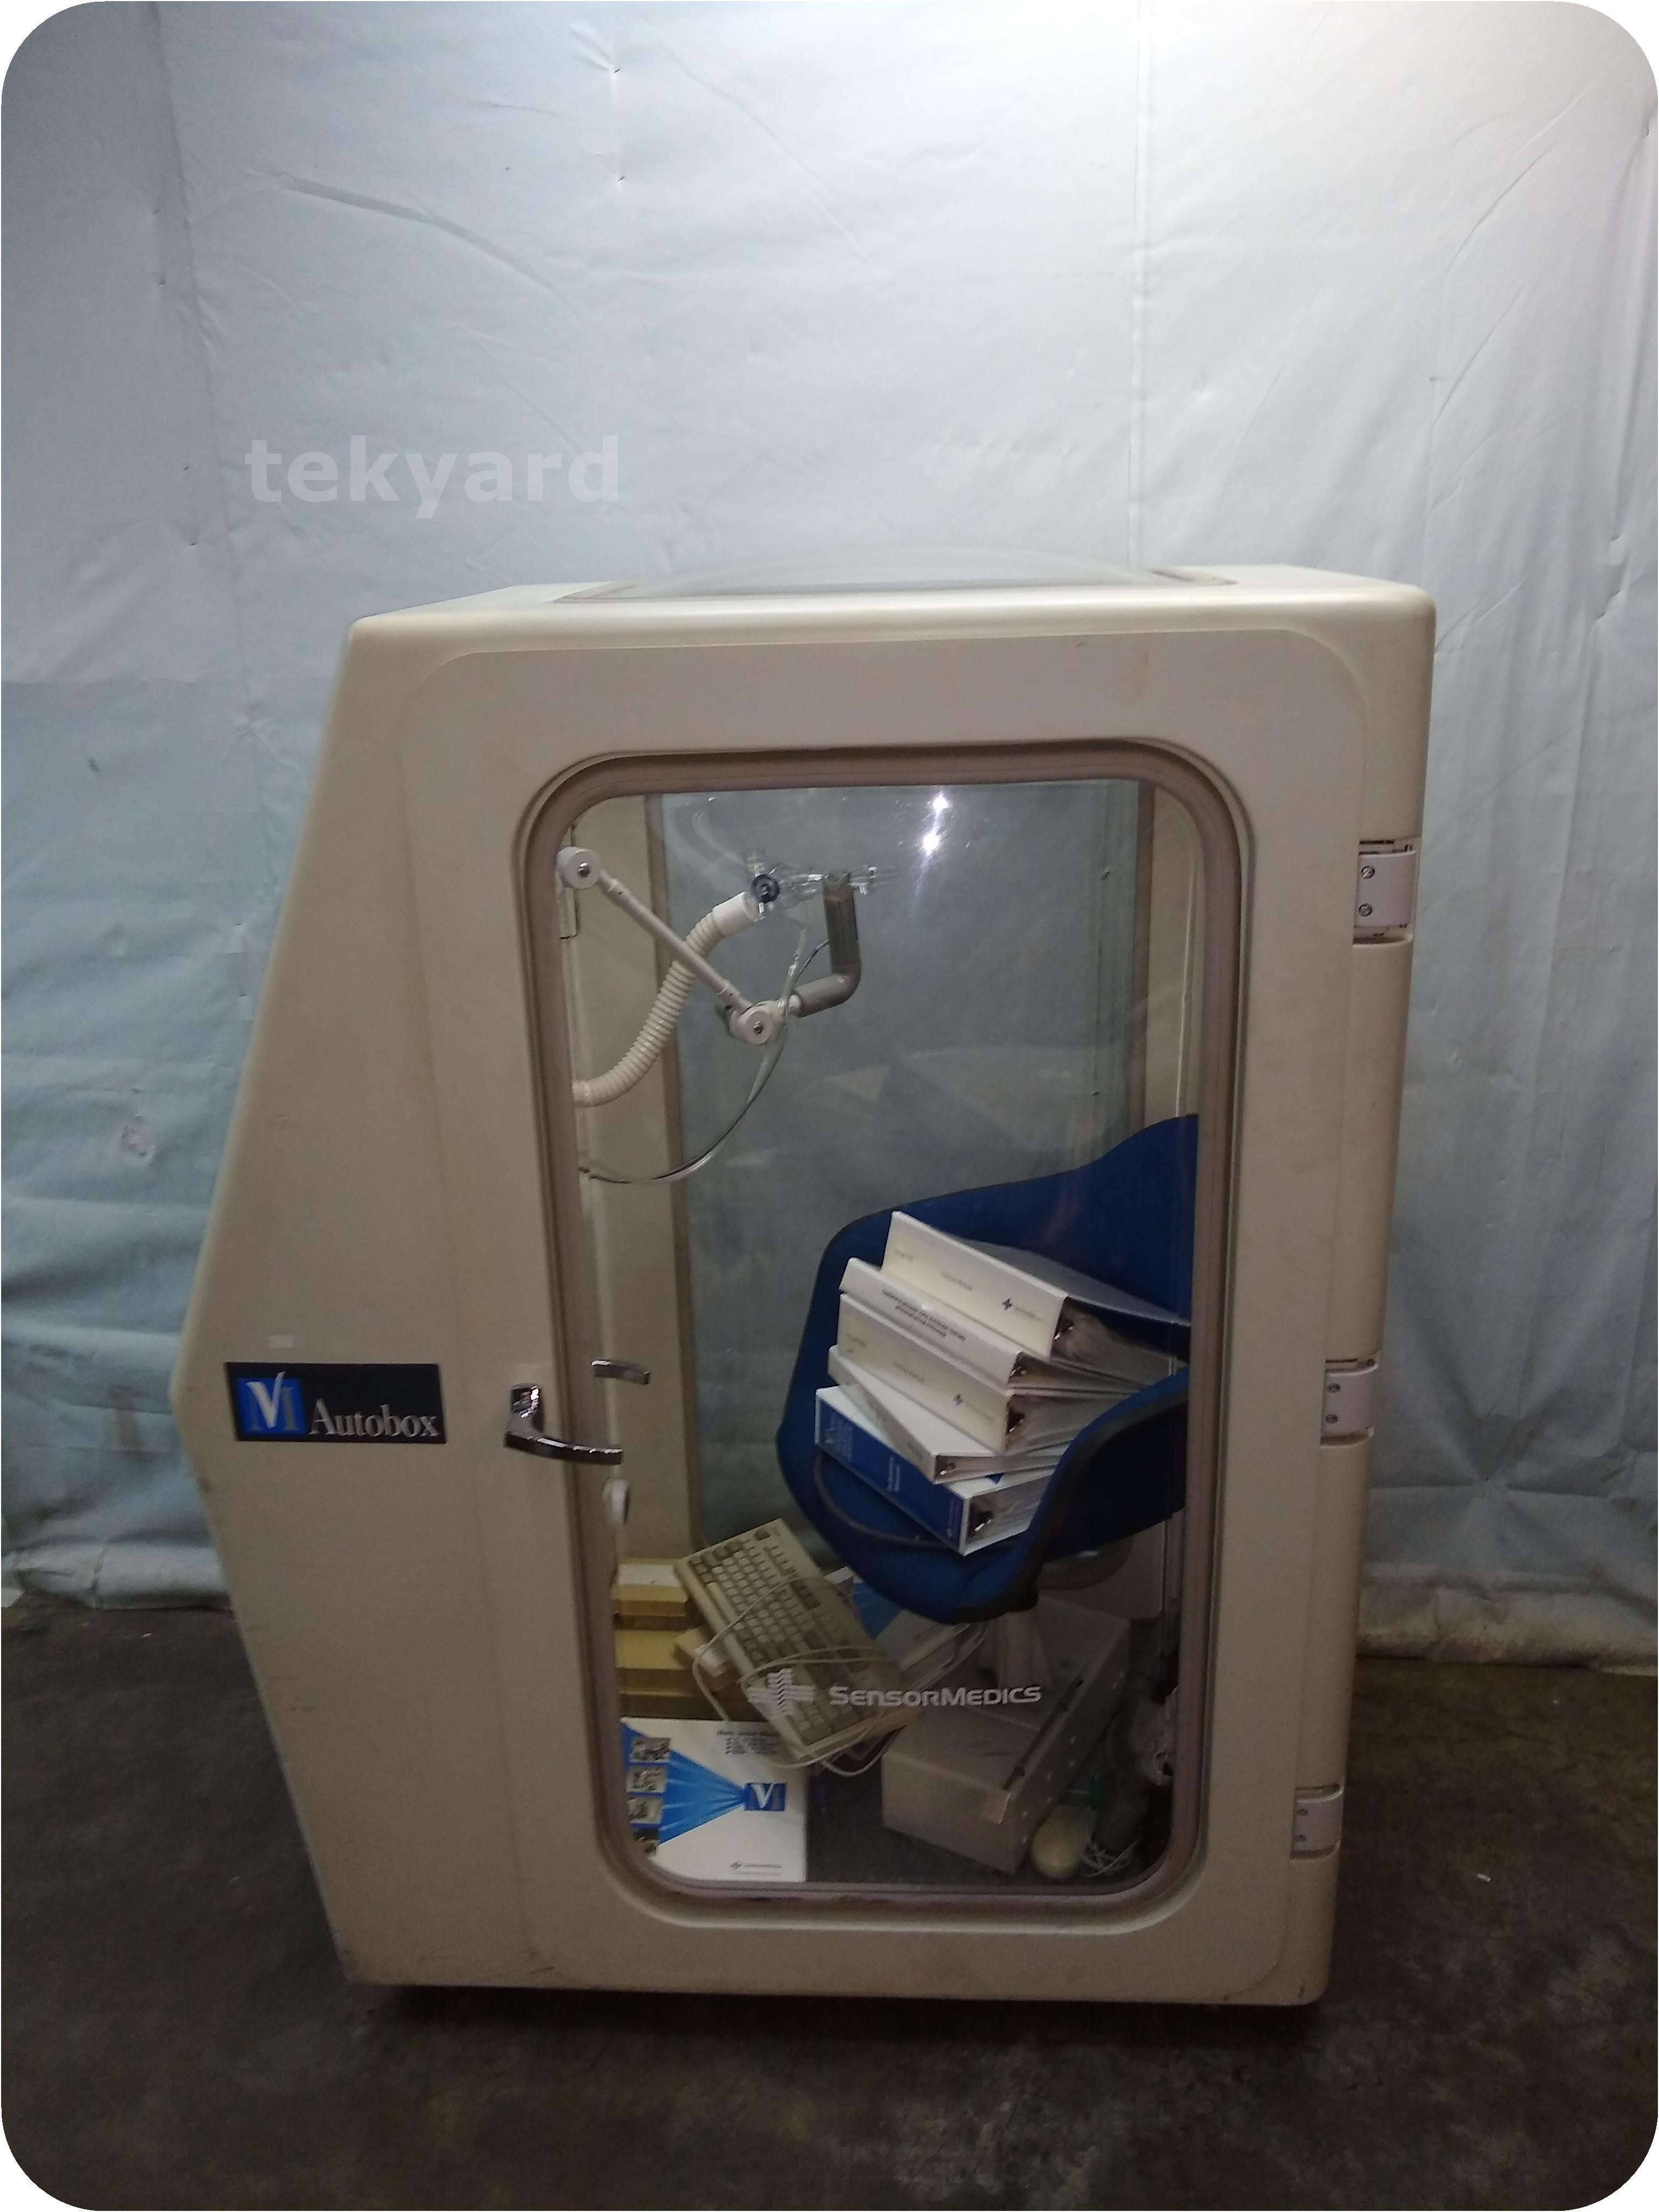 tekyard, LLC. - 224209-SensorMedics V6200 Autobox 769501-101 Plethysmograph  Respiratory Analyzer